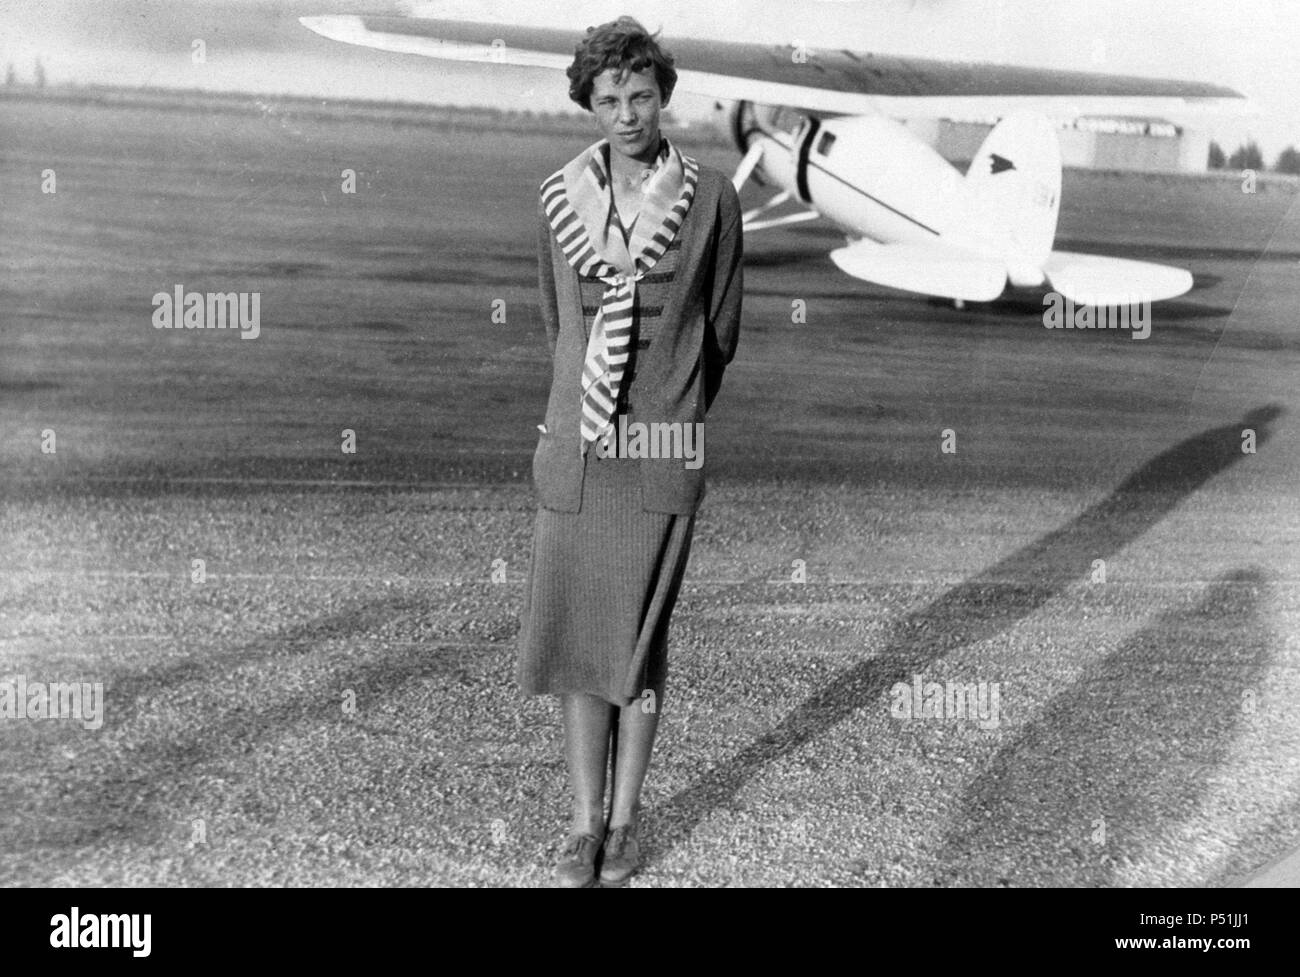 Amelia Earhart. US Aviatrix, with white Lockheed Vega Monoplane after speed record, 11/22/29. Stock Photo